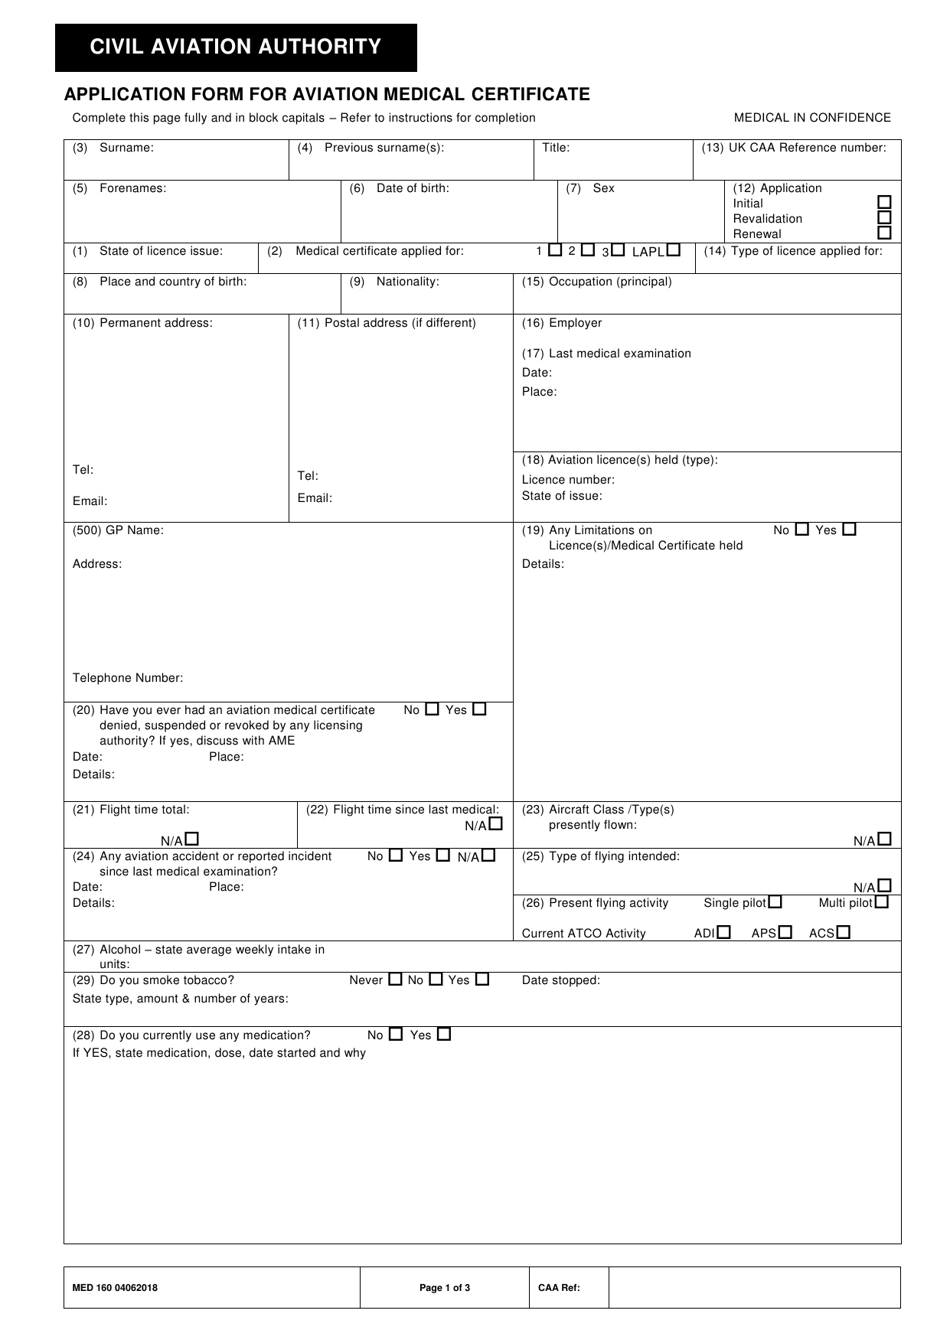 Form MED160 Application Form for Aviation Medical Certificate - United Kingdom, Page 1